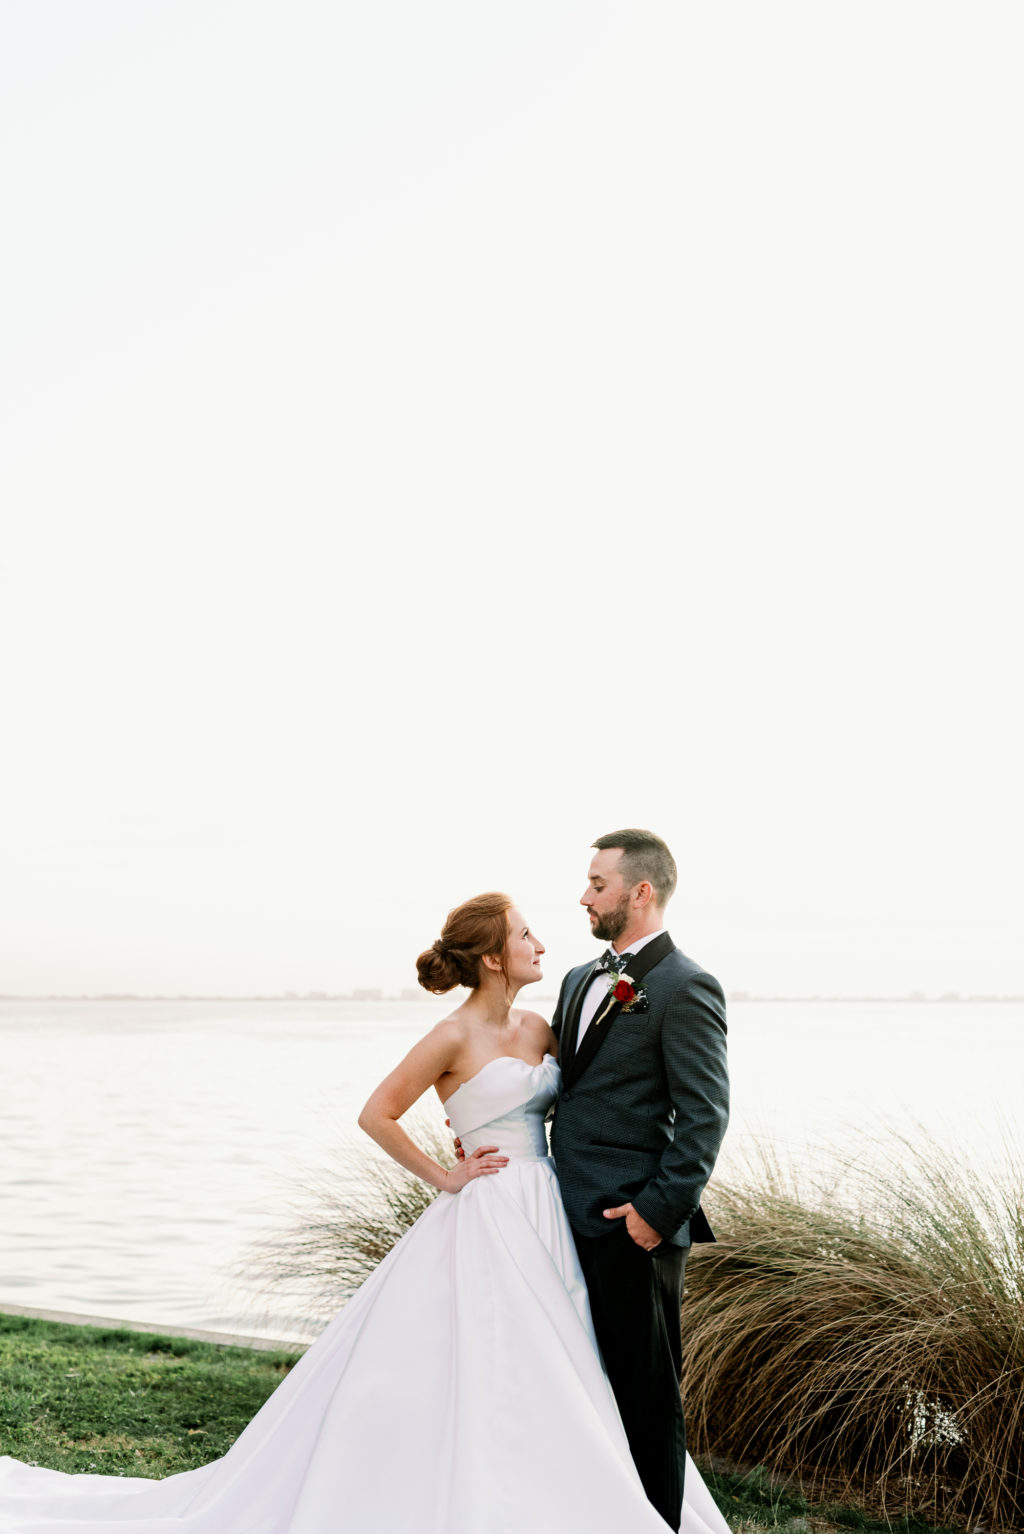 Timeless Bride and Groom Romantic Photo | Tampa Bay Wedding Photographer Dewitt for Love Photography | Sarasota Wedding Venue Powel Crosley Estate